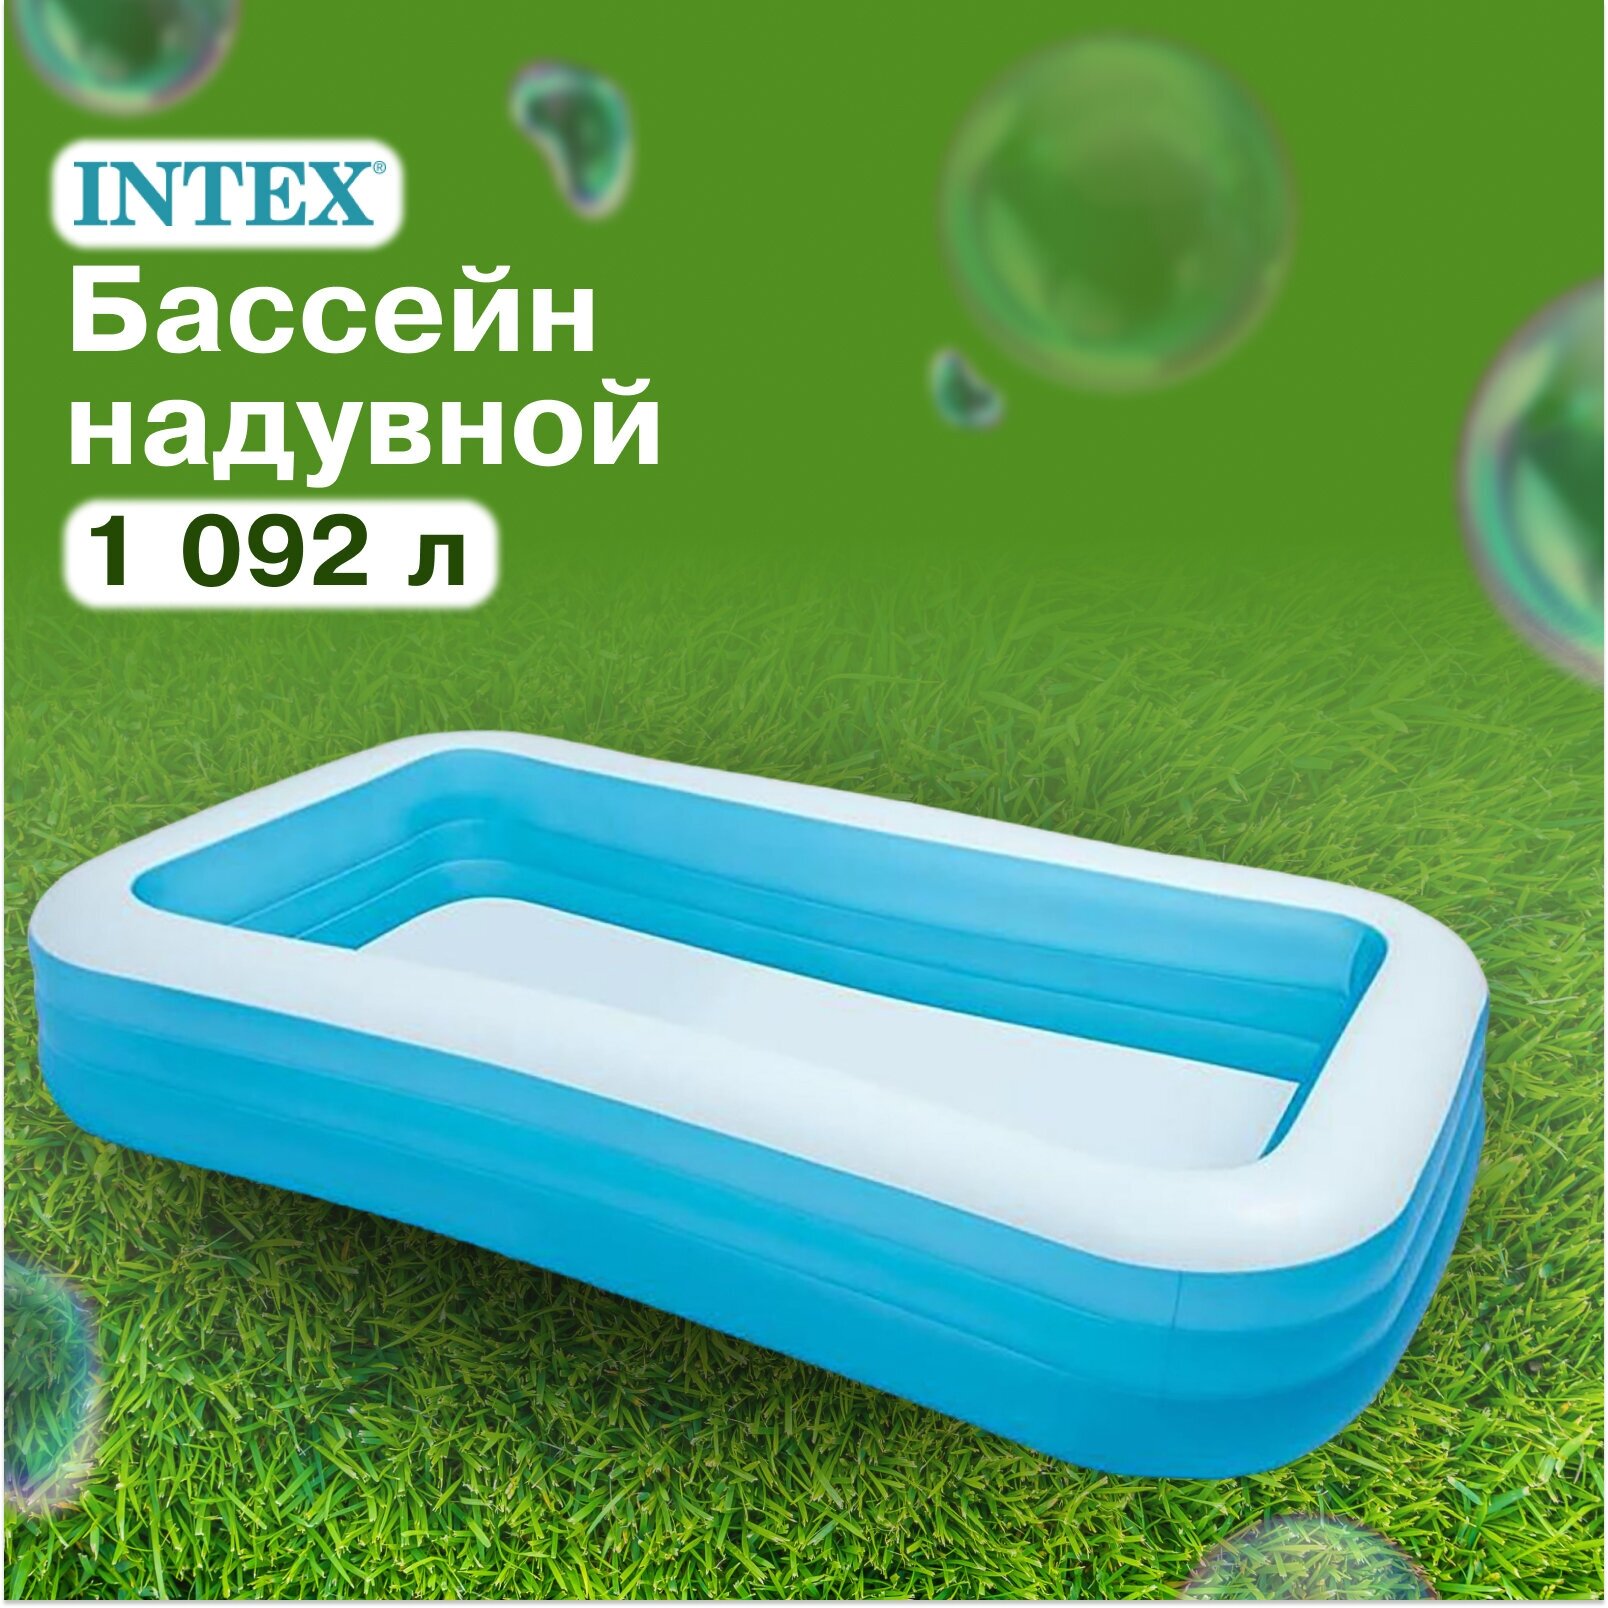 Бассейн надувной INTEX, размер 305 х 183 х 56 см, от 6 лет 58484, цвет голубой, белый